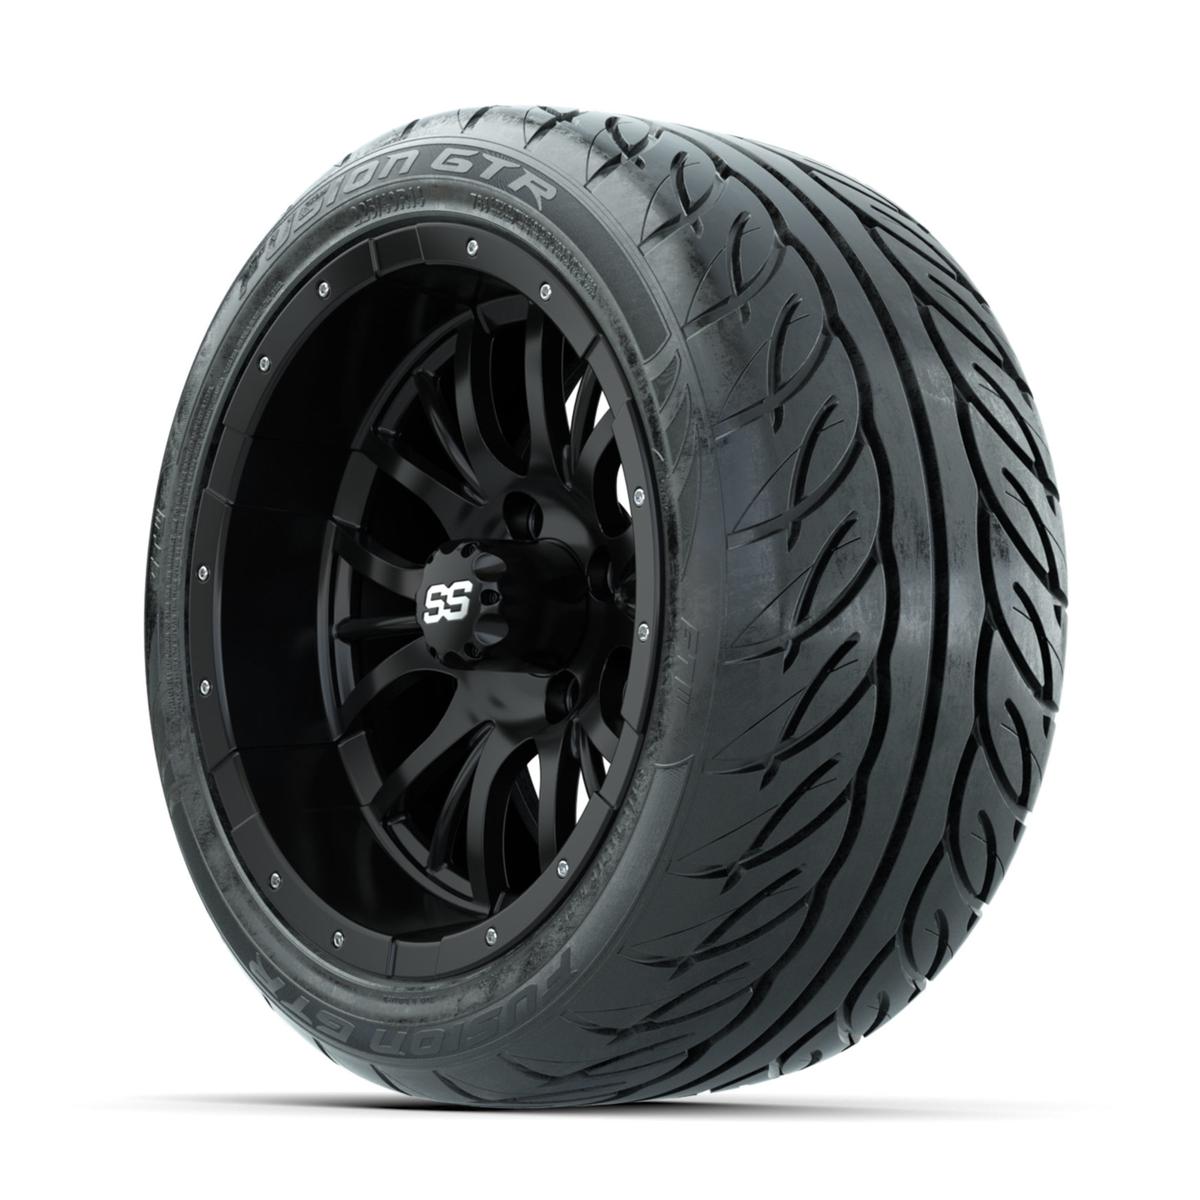 GTW Diesel Matte Black 14 in Wheels with 225/40-R14 Fusion GTR Street Tires – Full Set